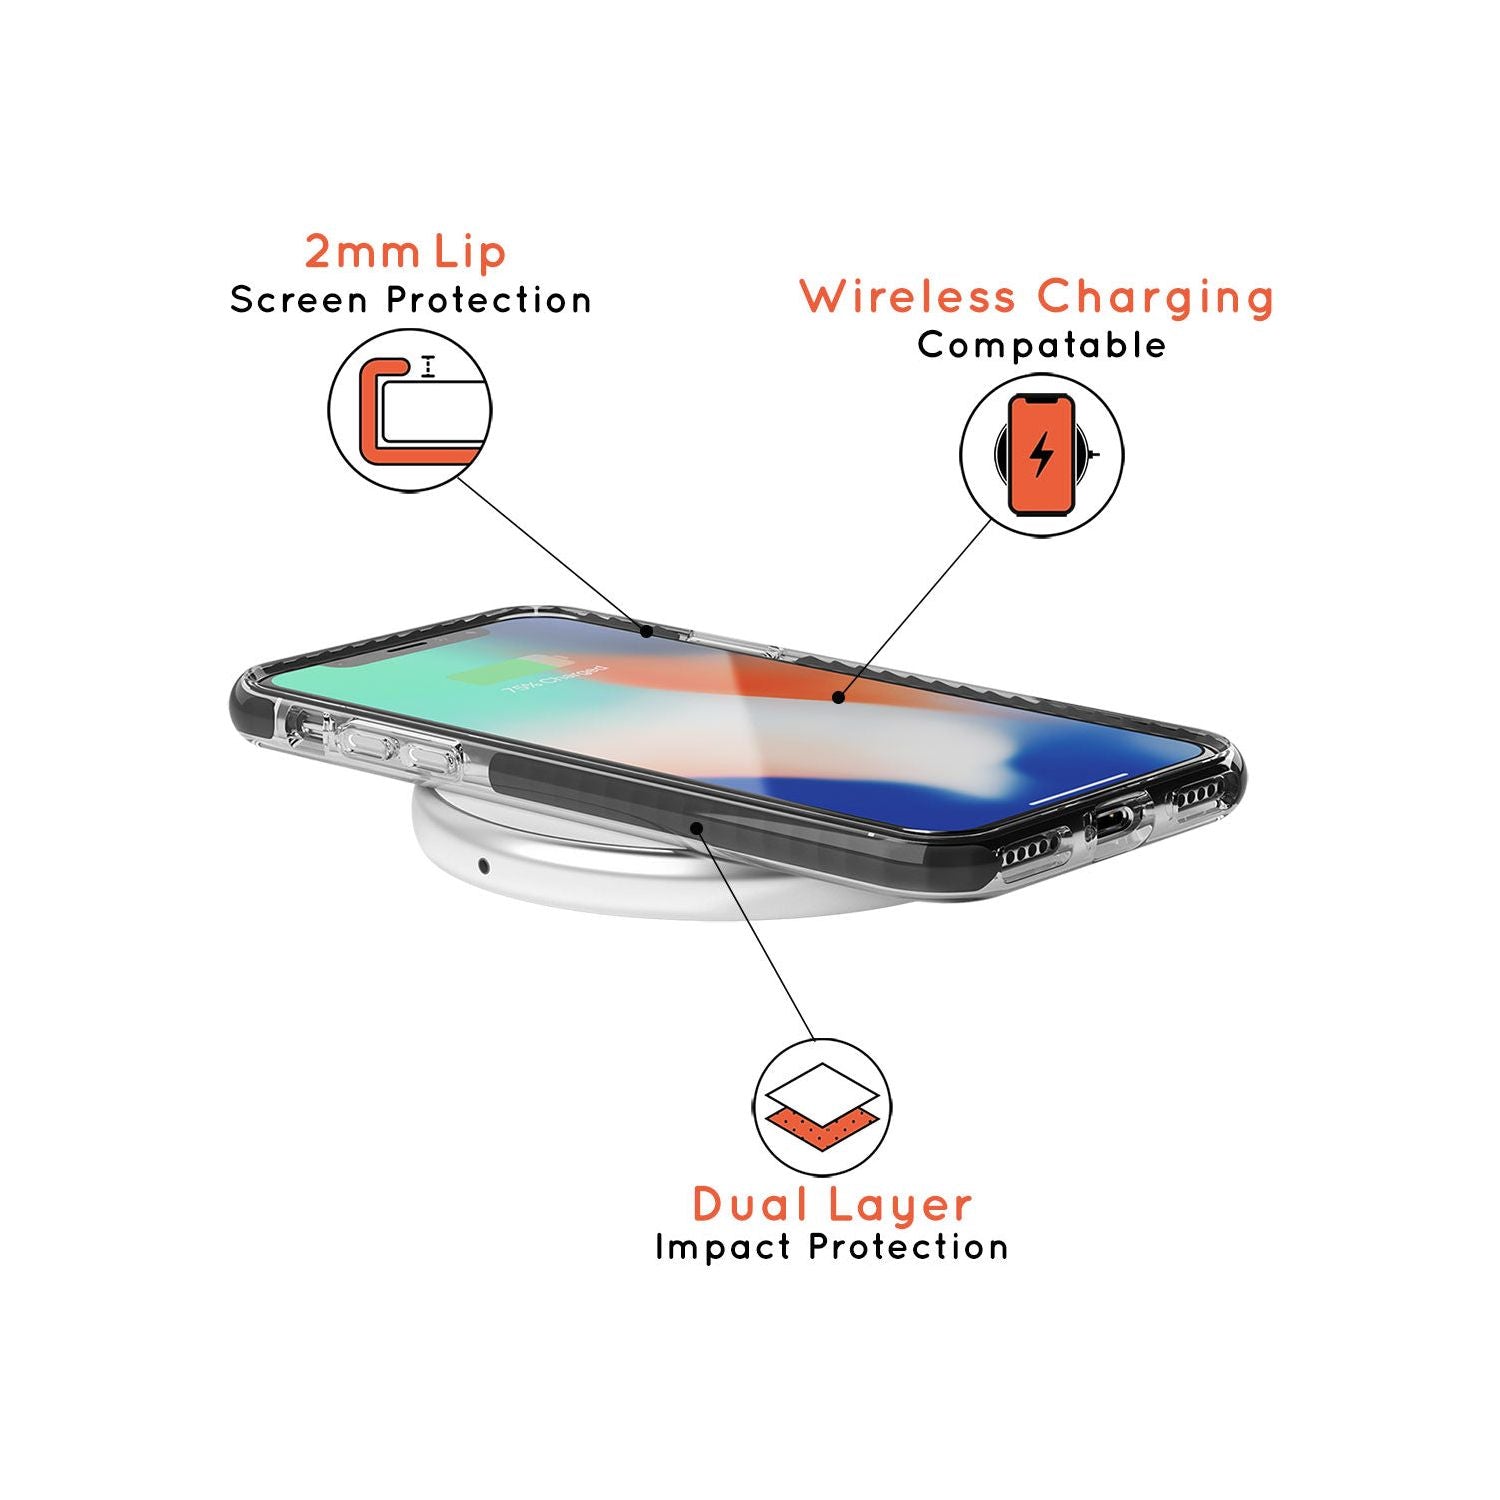 Libra Emblem - Transparent Design Black Impact Phone Case for iPhone X XS Max XR